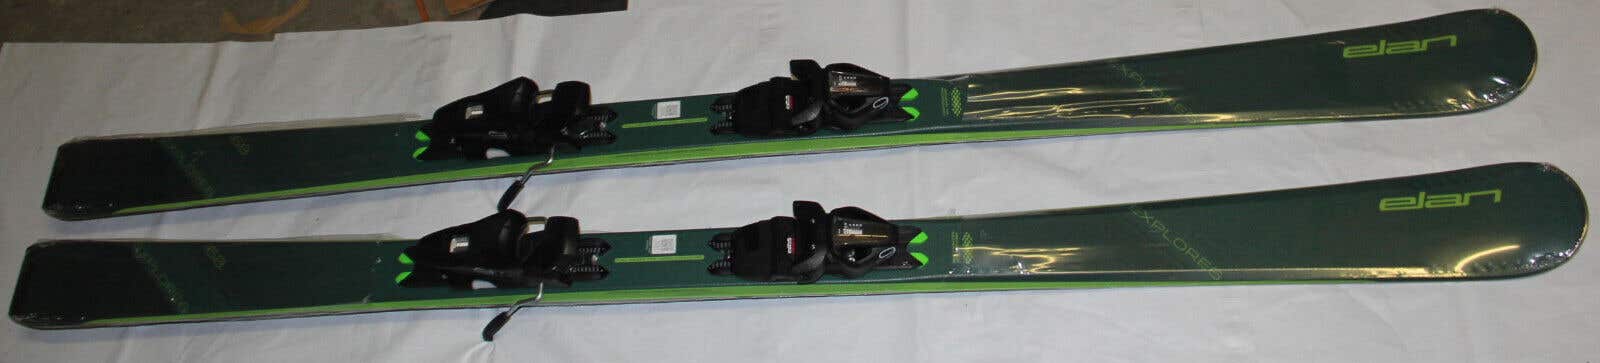 NEW  Elan  Explore 6 Skis men's  with EL 9GW Bindings size adjustable green NEW 160cm